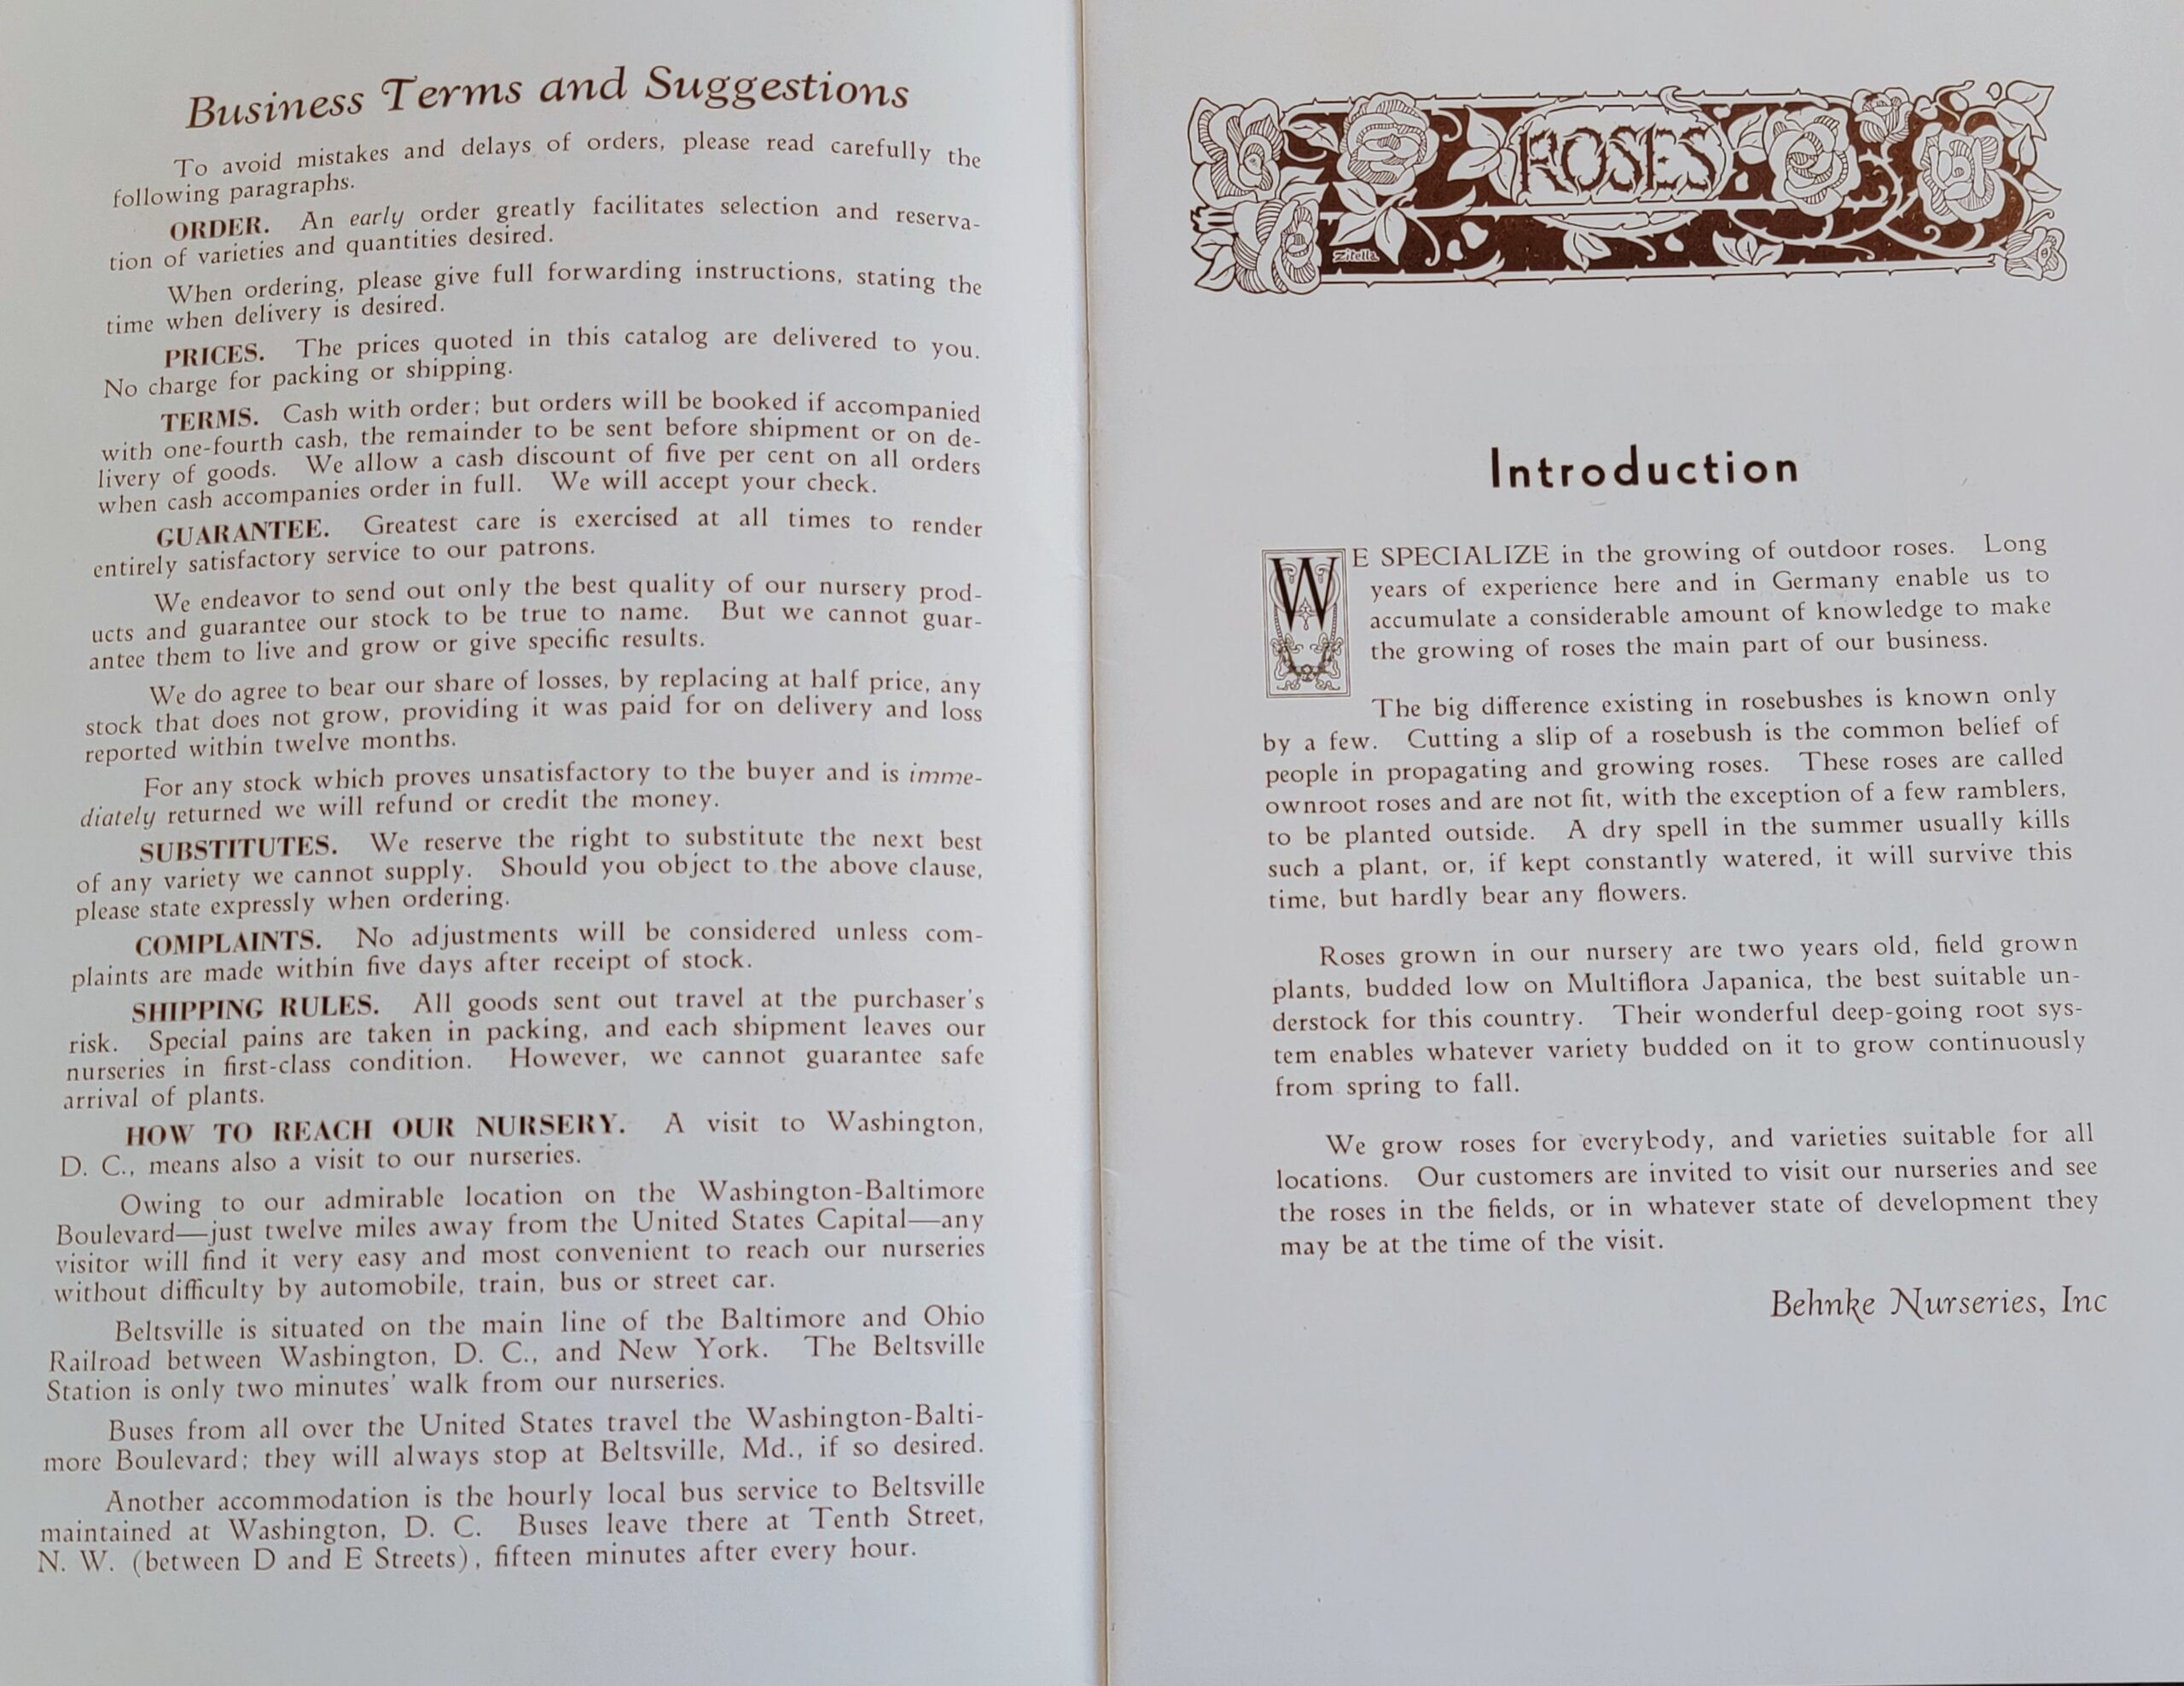 1932 Behnke Nurseries Roses Catalog Introduction